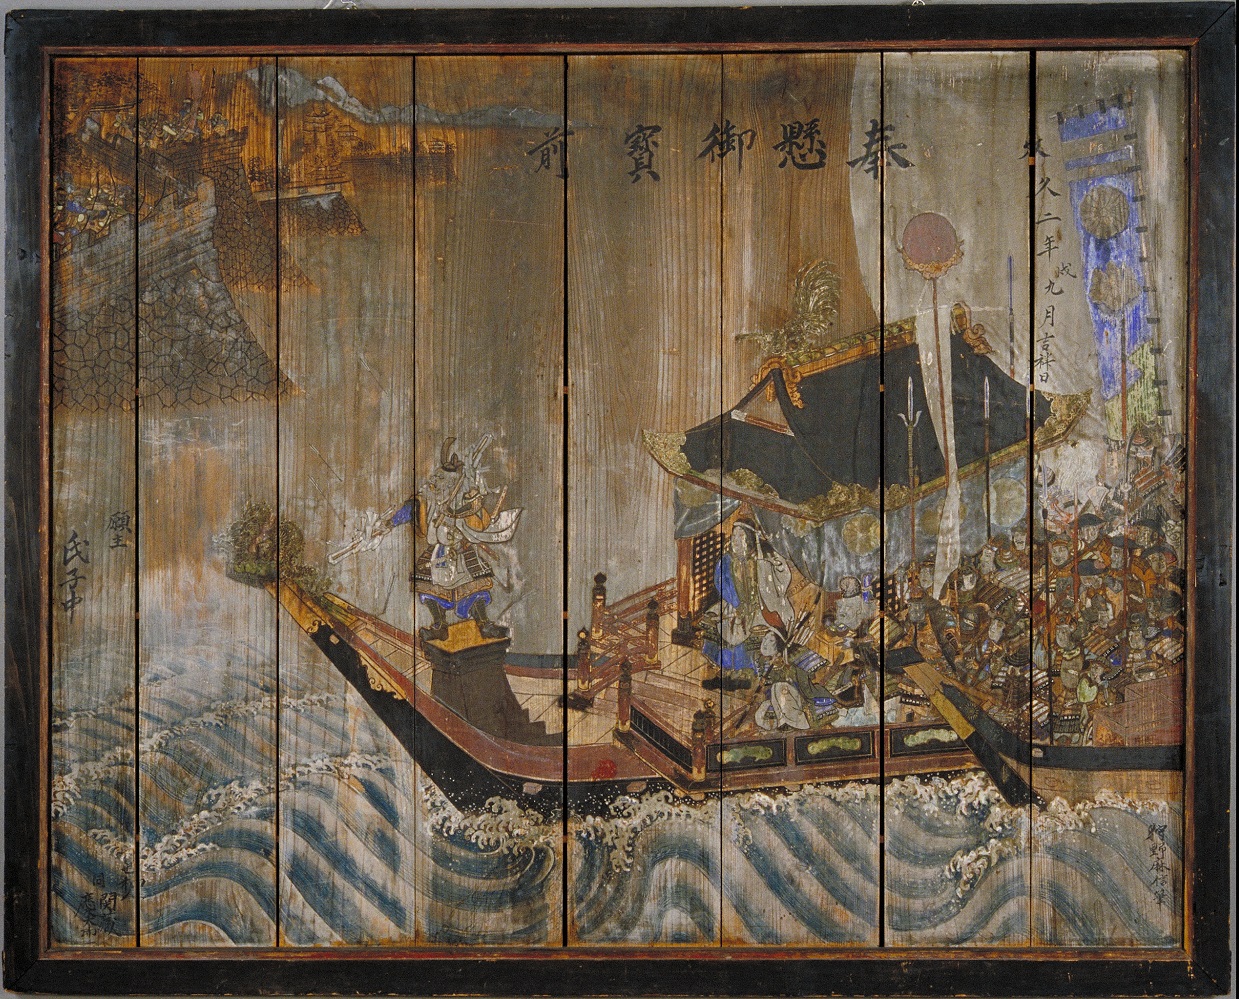 Empress Jingū Shinto votive tablet (ema), painted by Kano Asanobu, Japan, 1862. Museum of International Folk Art, Gift of Lloyd E. Cotsen and the Neutrogena Corporation (A.1995.93.1525).